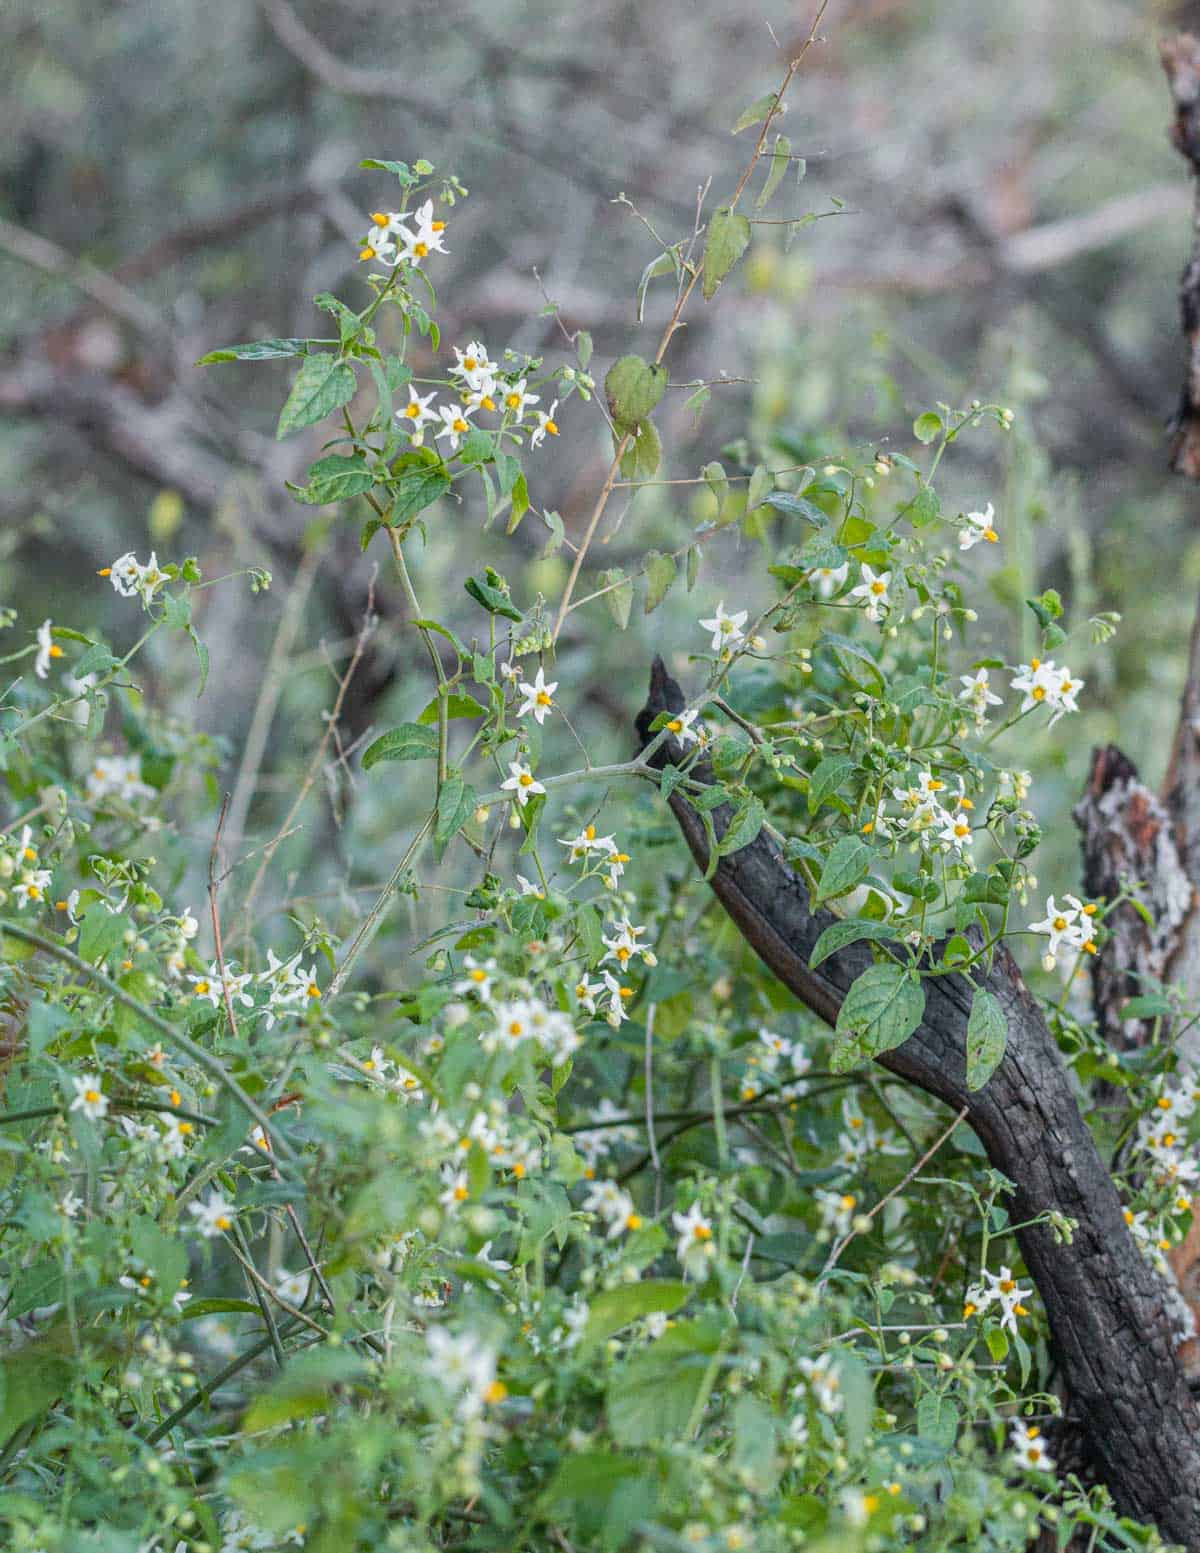 A large Western black nightshade plant (Solanum americanum) in Arizona showing many white flowers. 